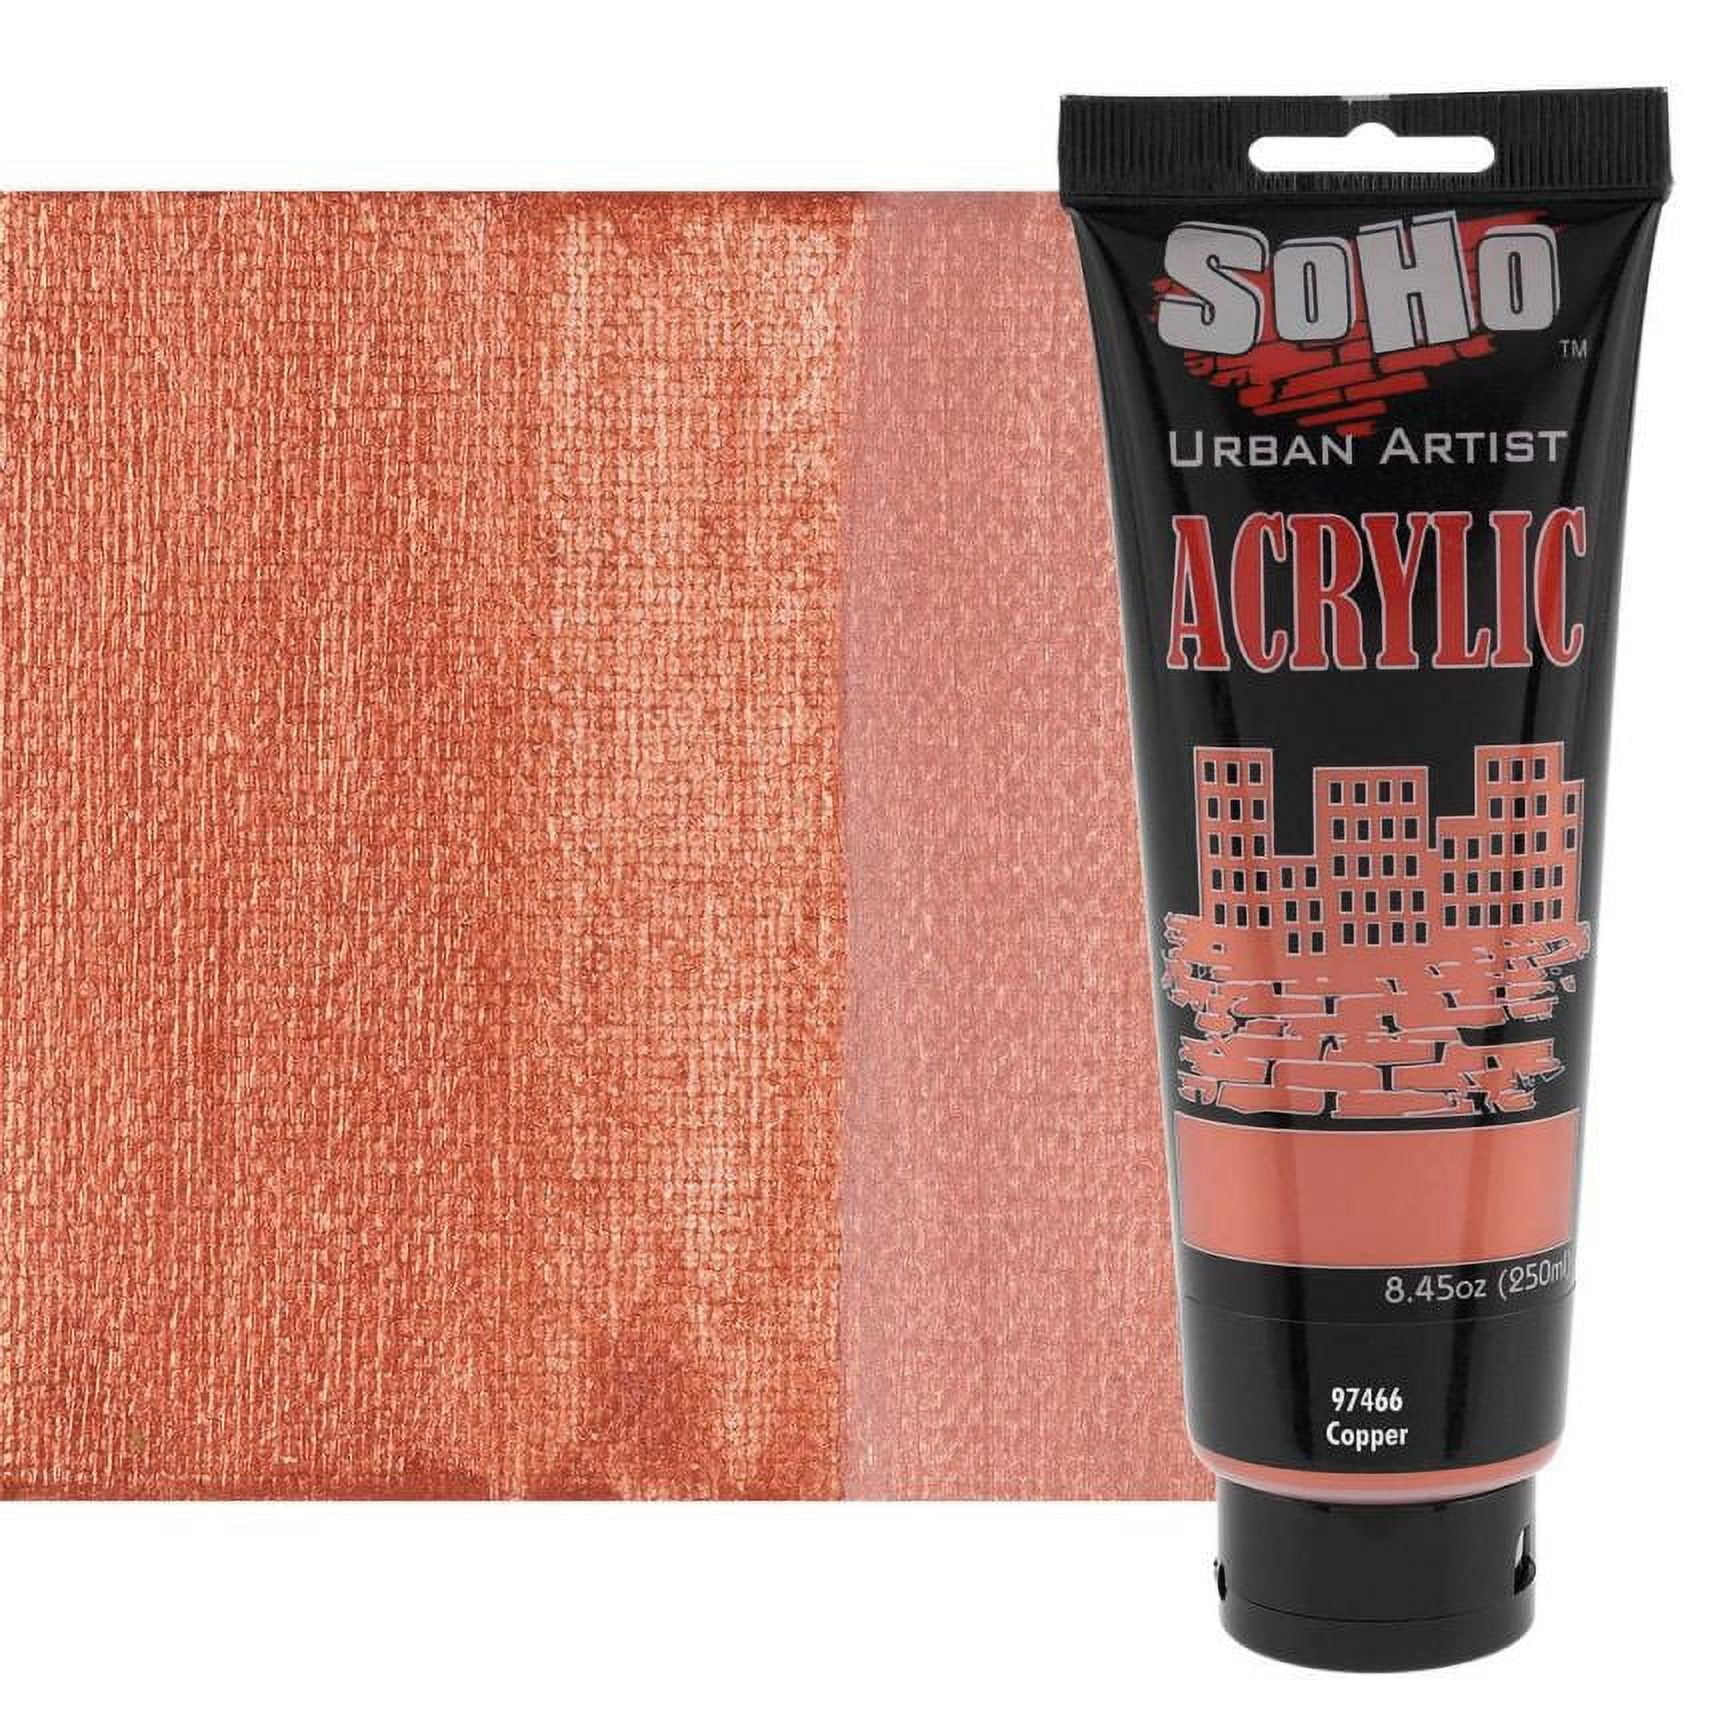 SoHo Urban Artists Heavy Body Acrylic - Alizarin Crimson, 500ml